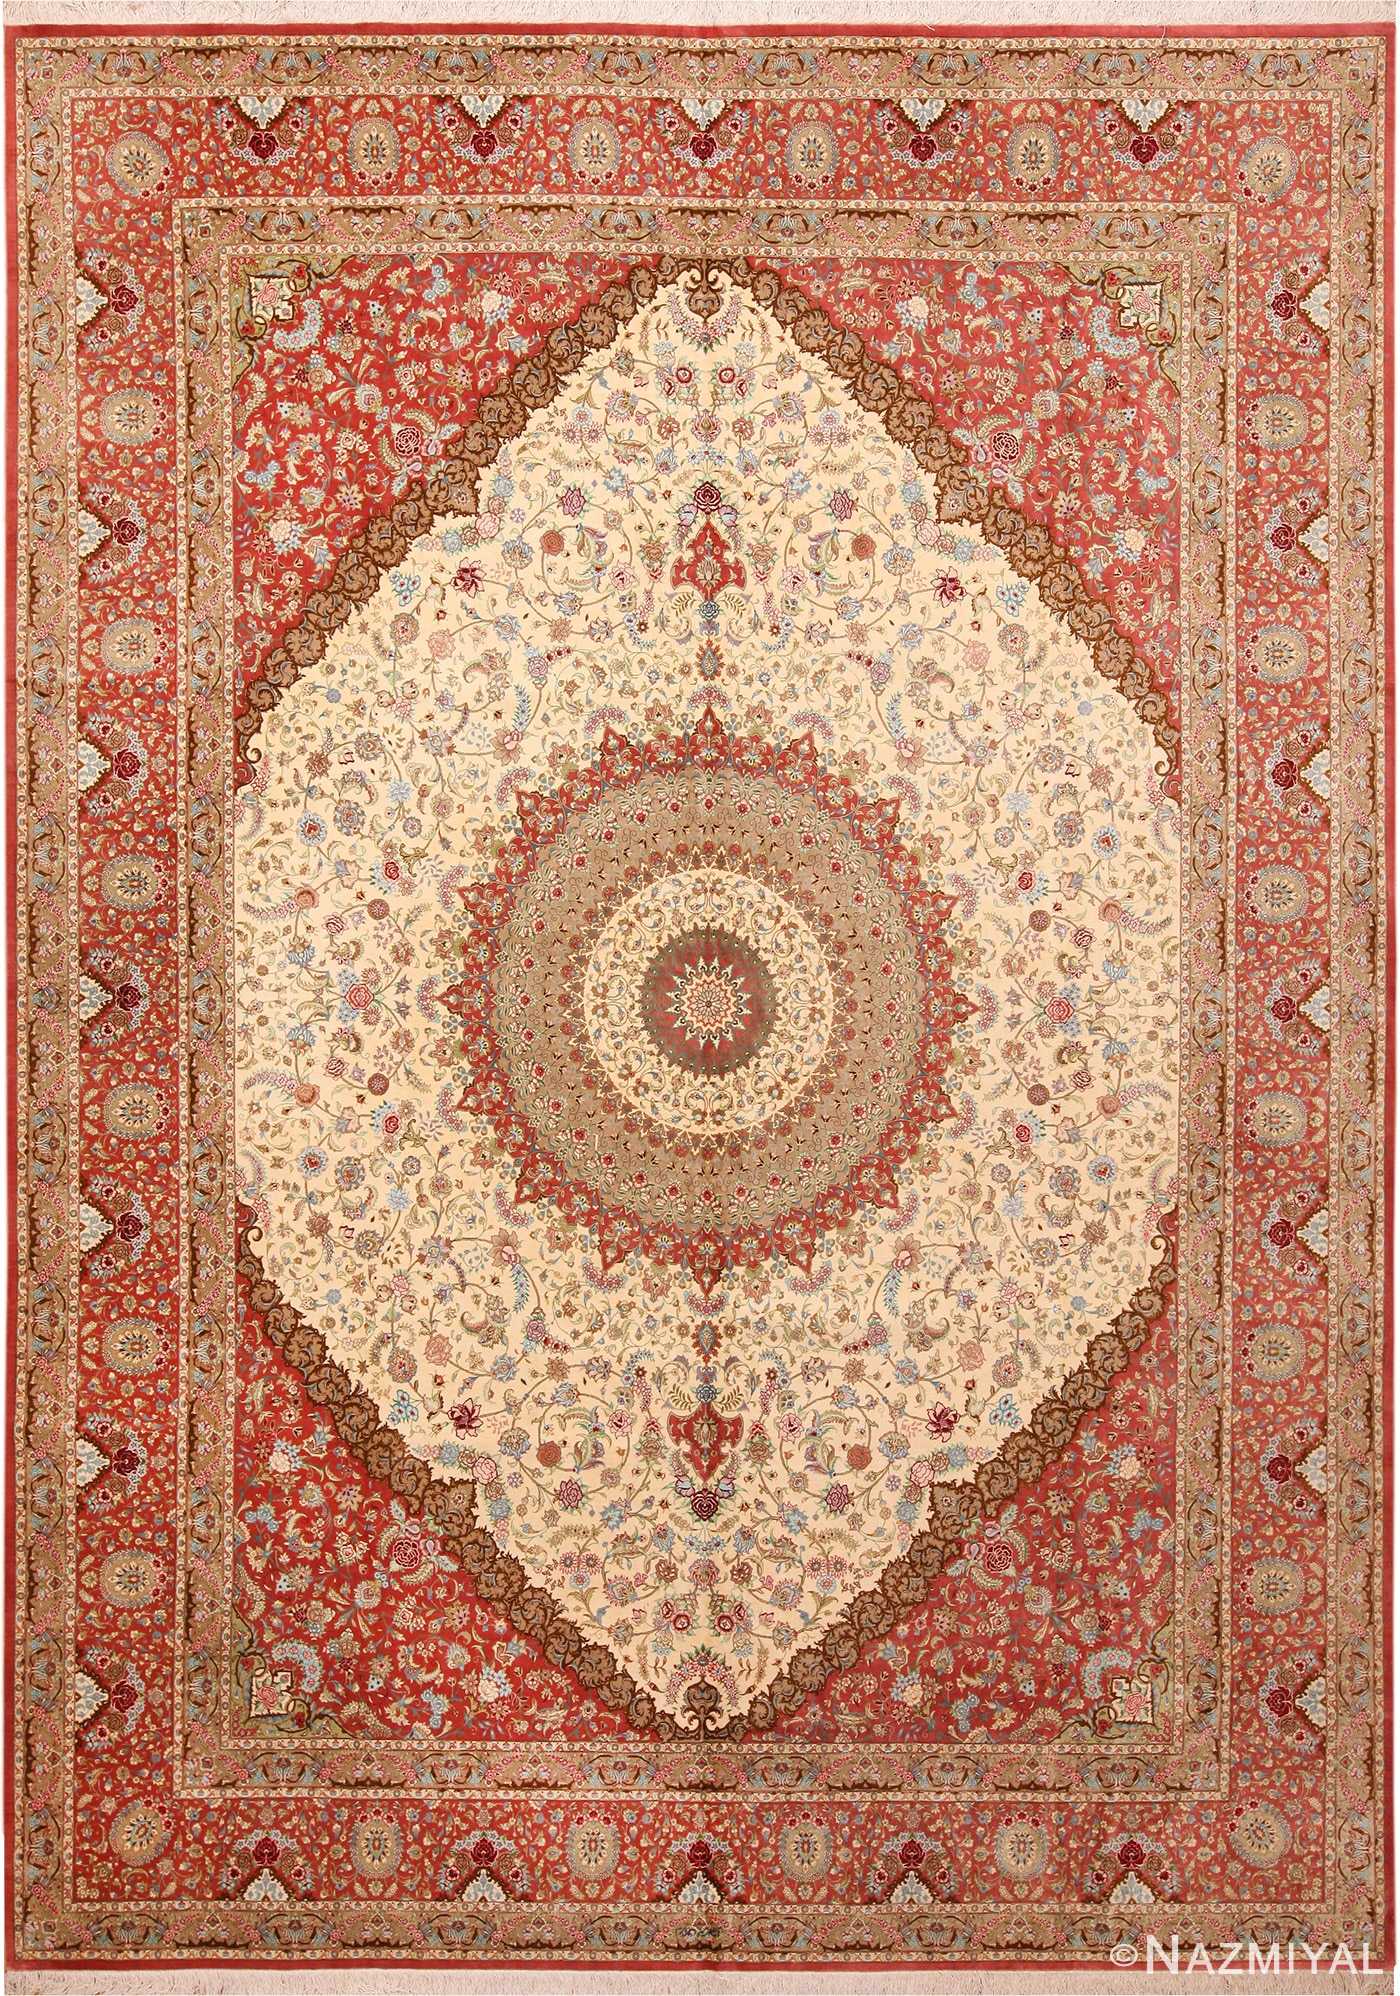 https://nazmiyalantiquerugs.com/wp-content/uploads/2020/11/watermark/fine-floral-medallion-vintage-persian-silk-qum-rug-70244-nazmiyal-antique-rugs.jpg